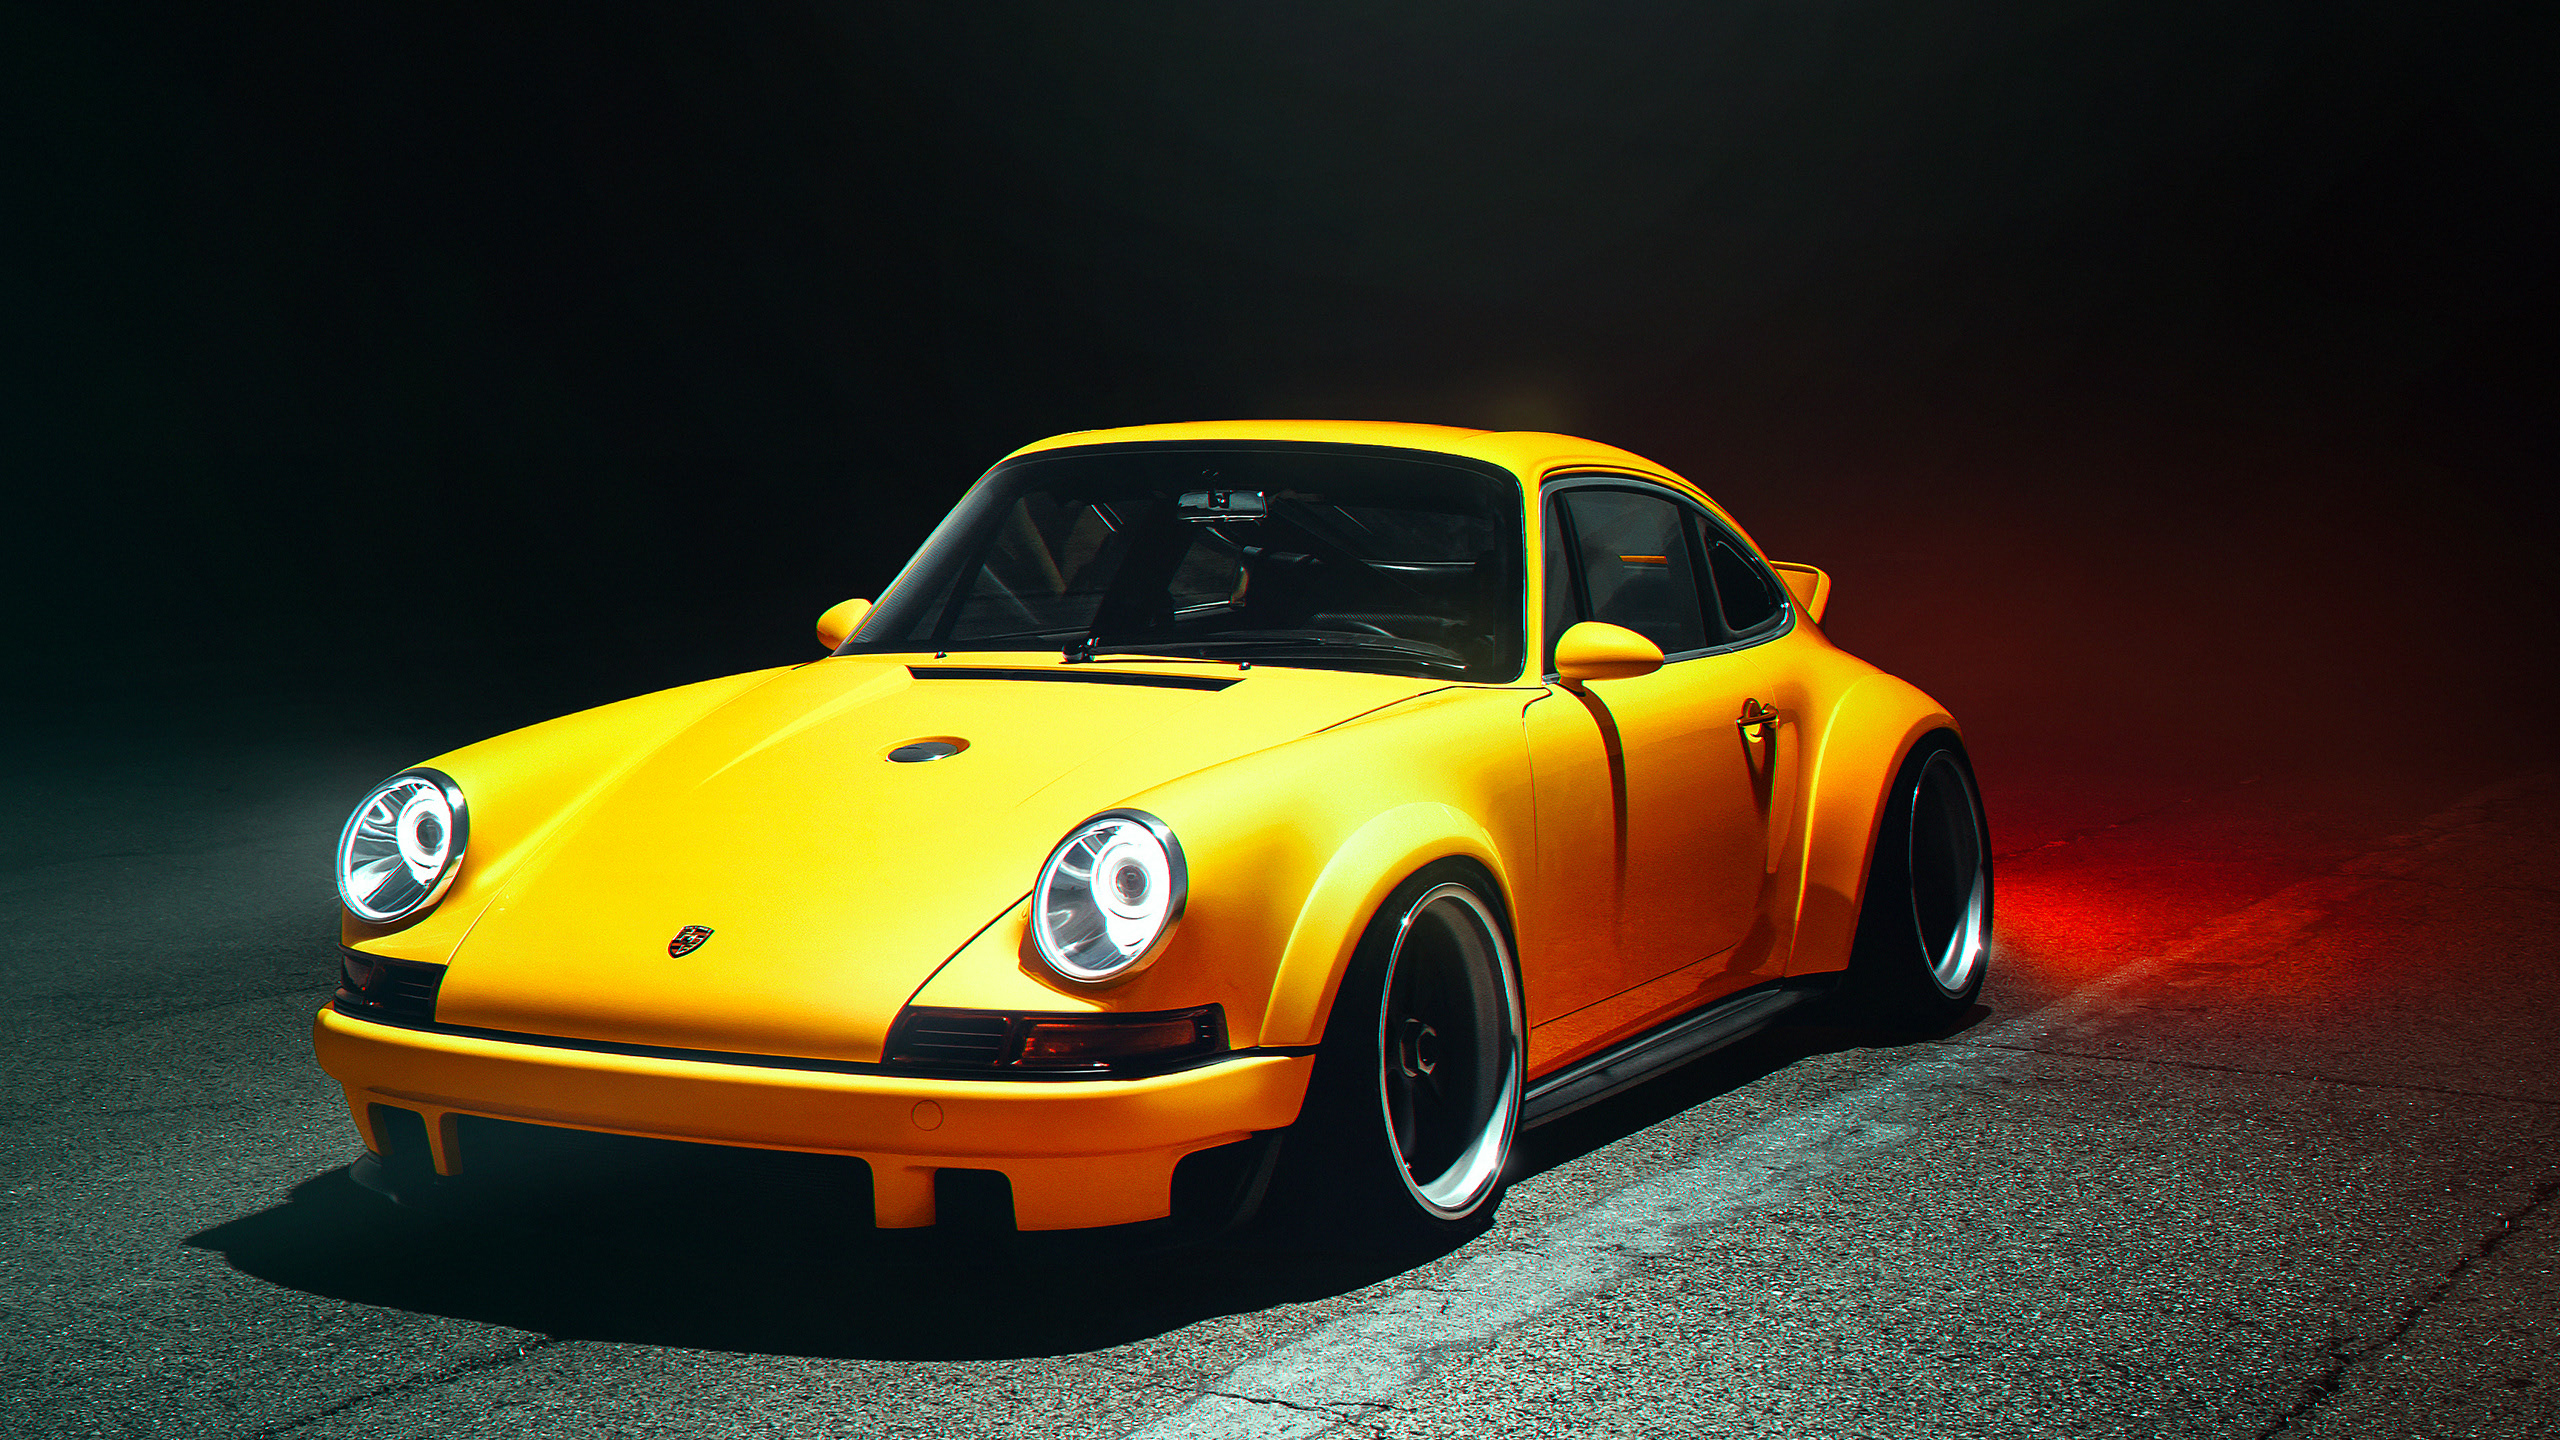 Car Automotive Porsche Porsche 911 German Cars Yellow Cars Night 2560x1440